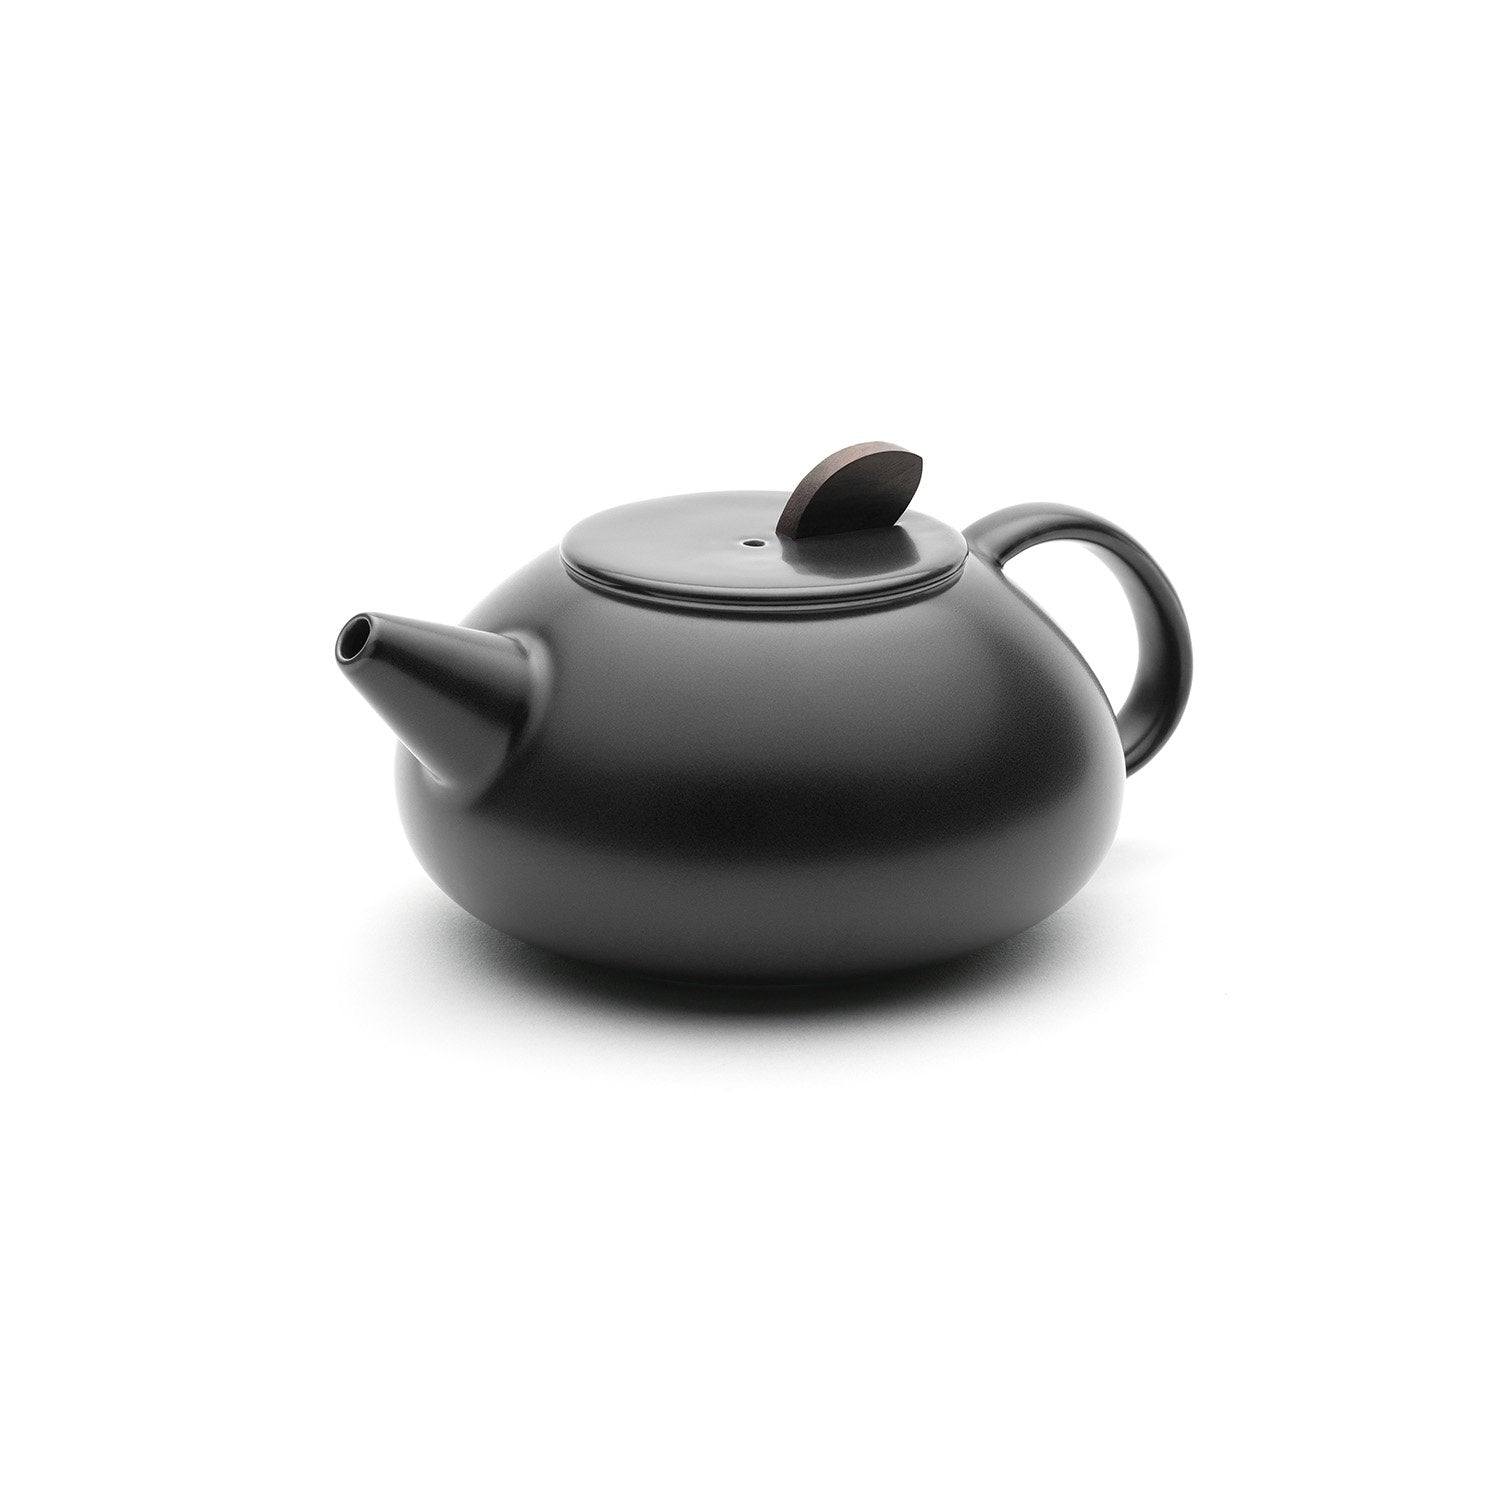 Black small teapot